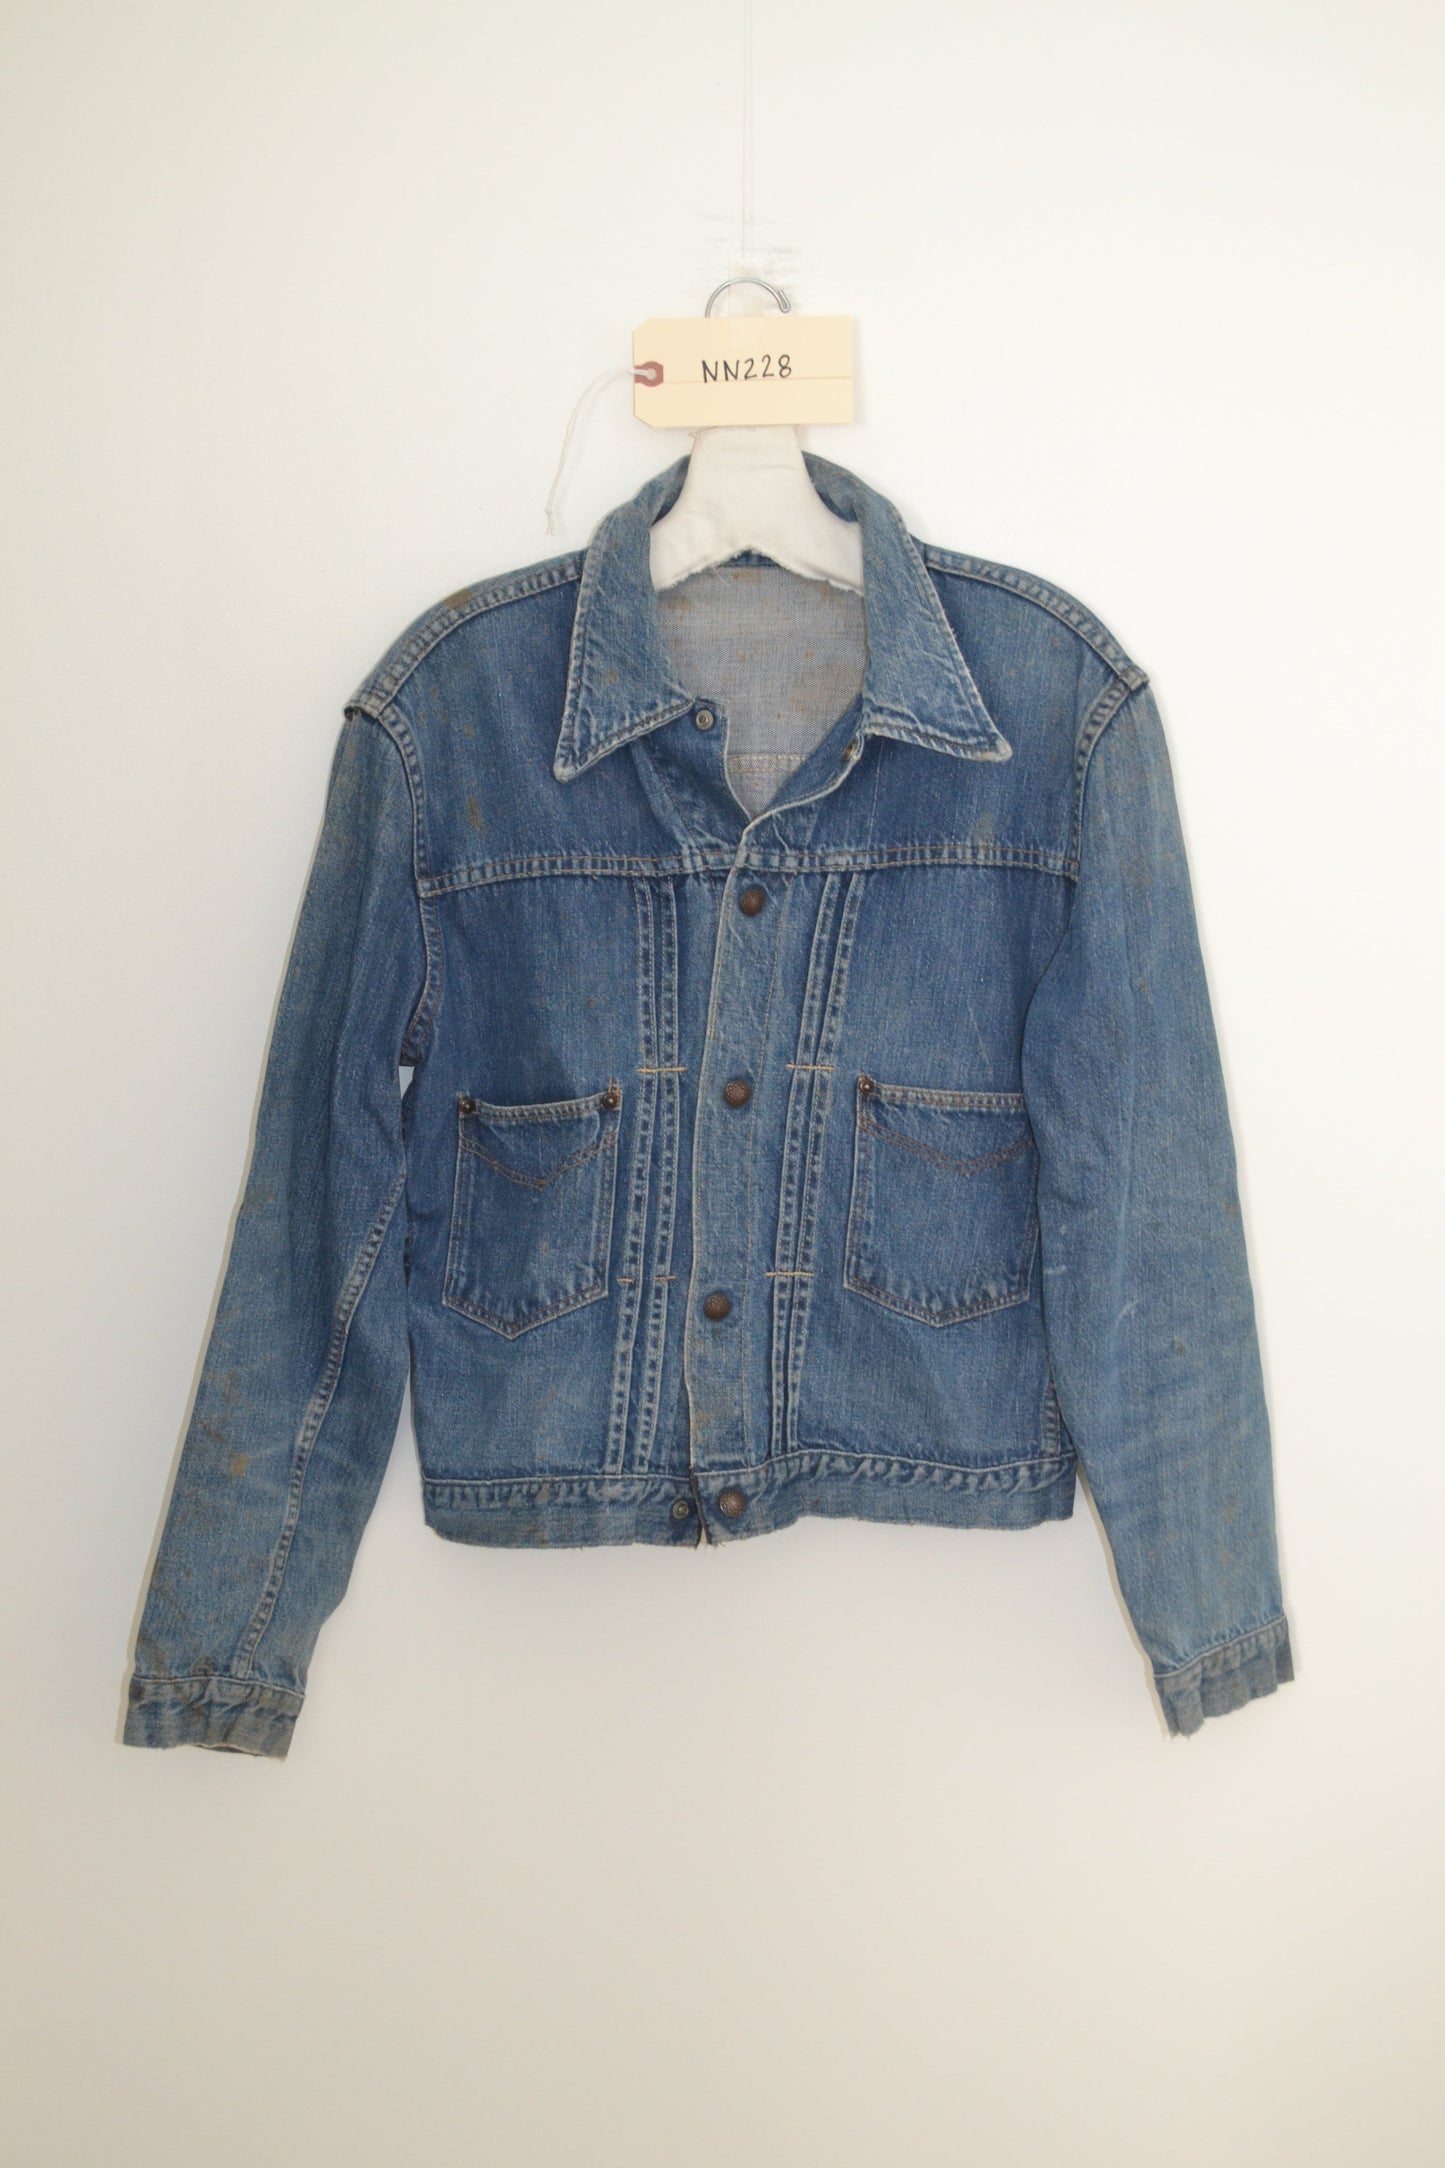 1960's Workwear Jacket. NN228